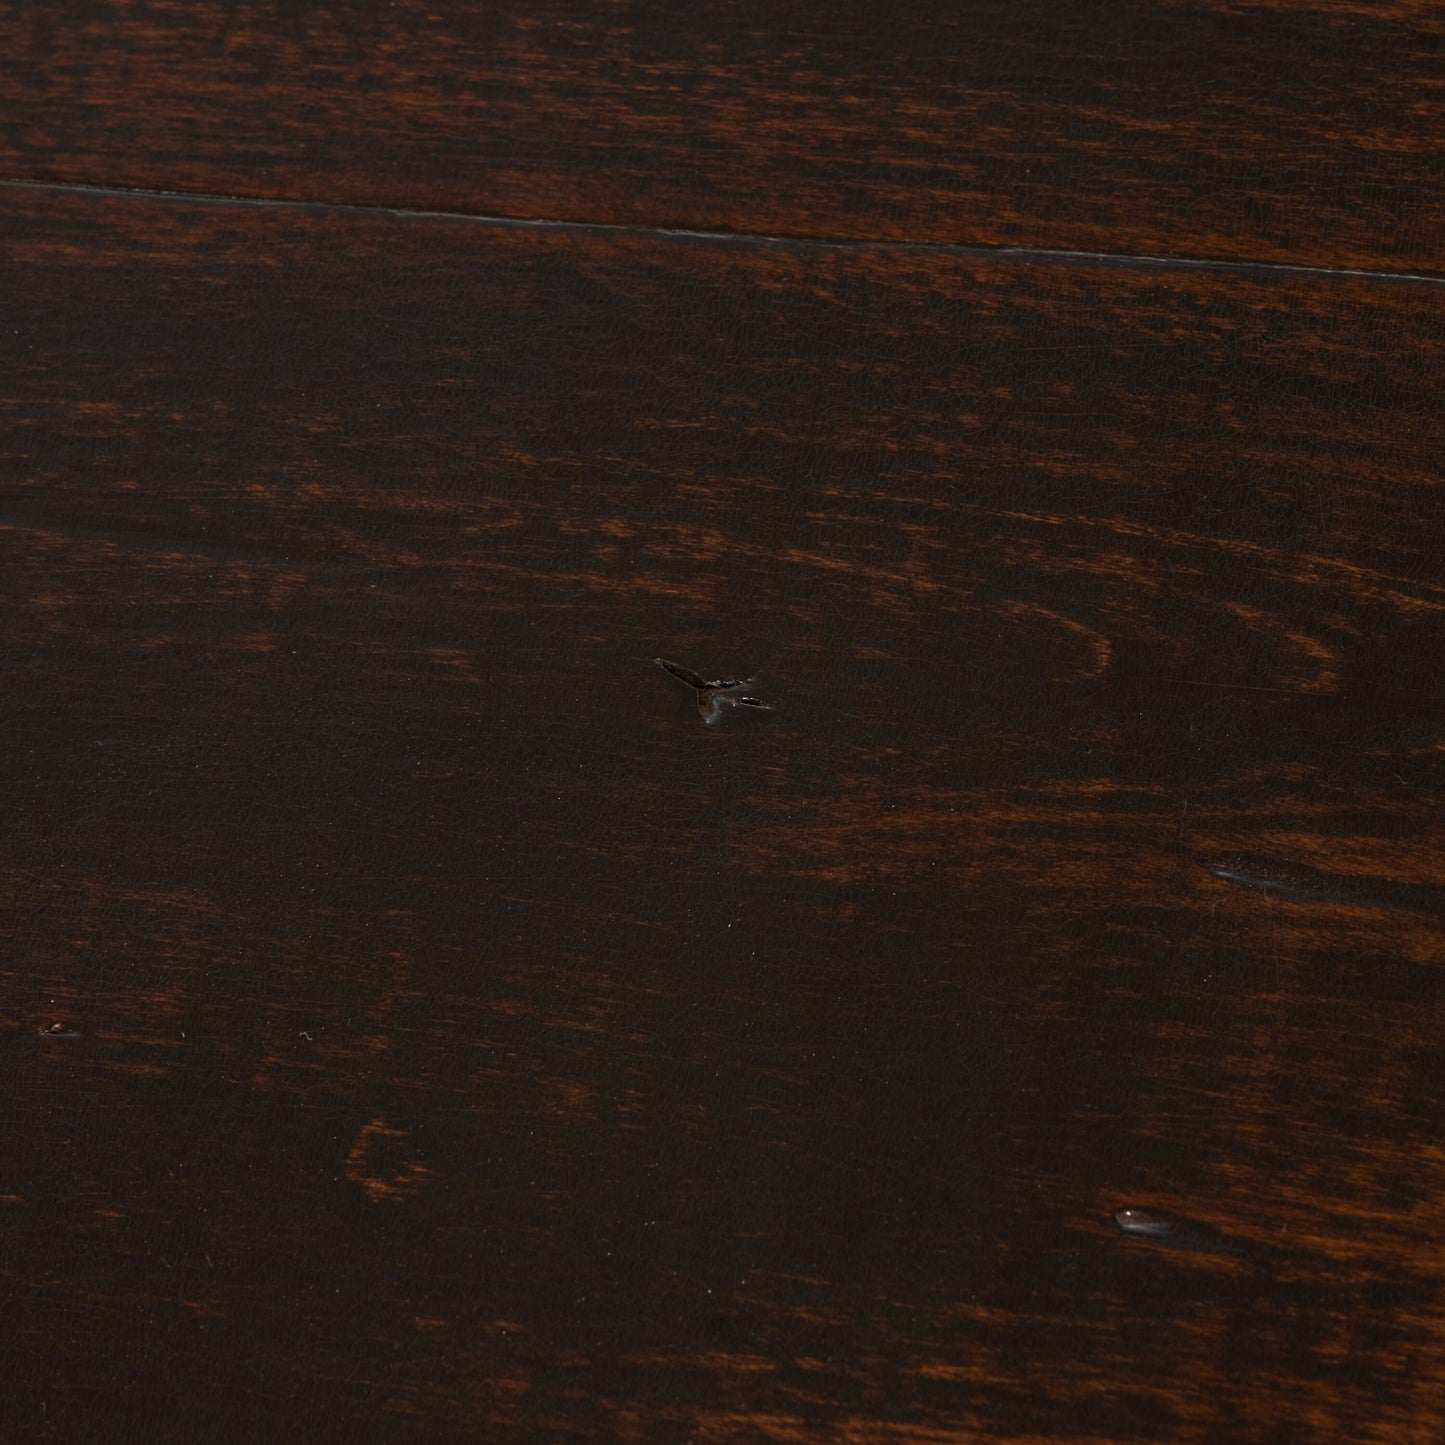 Ovilla oval dining table: distressed walnut